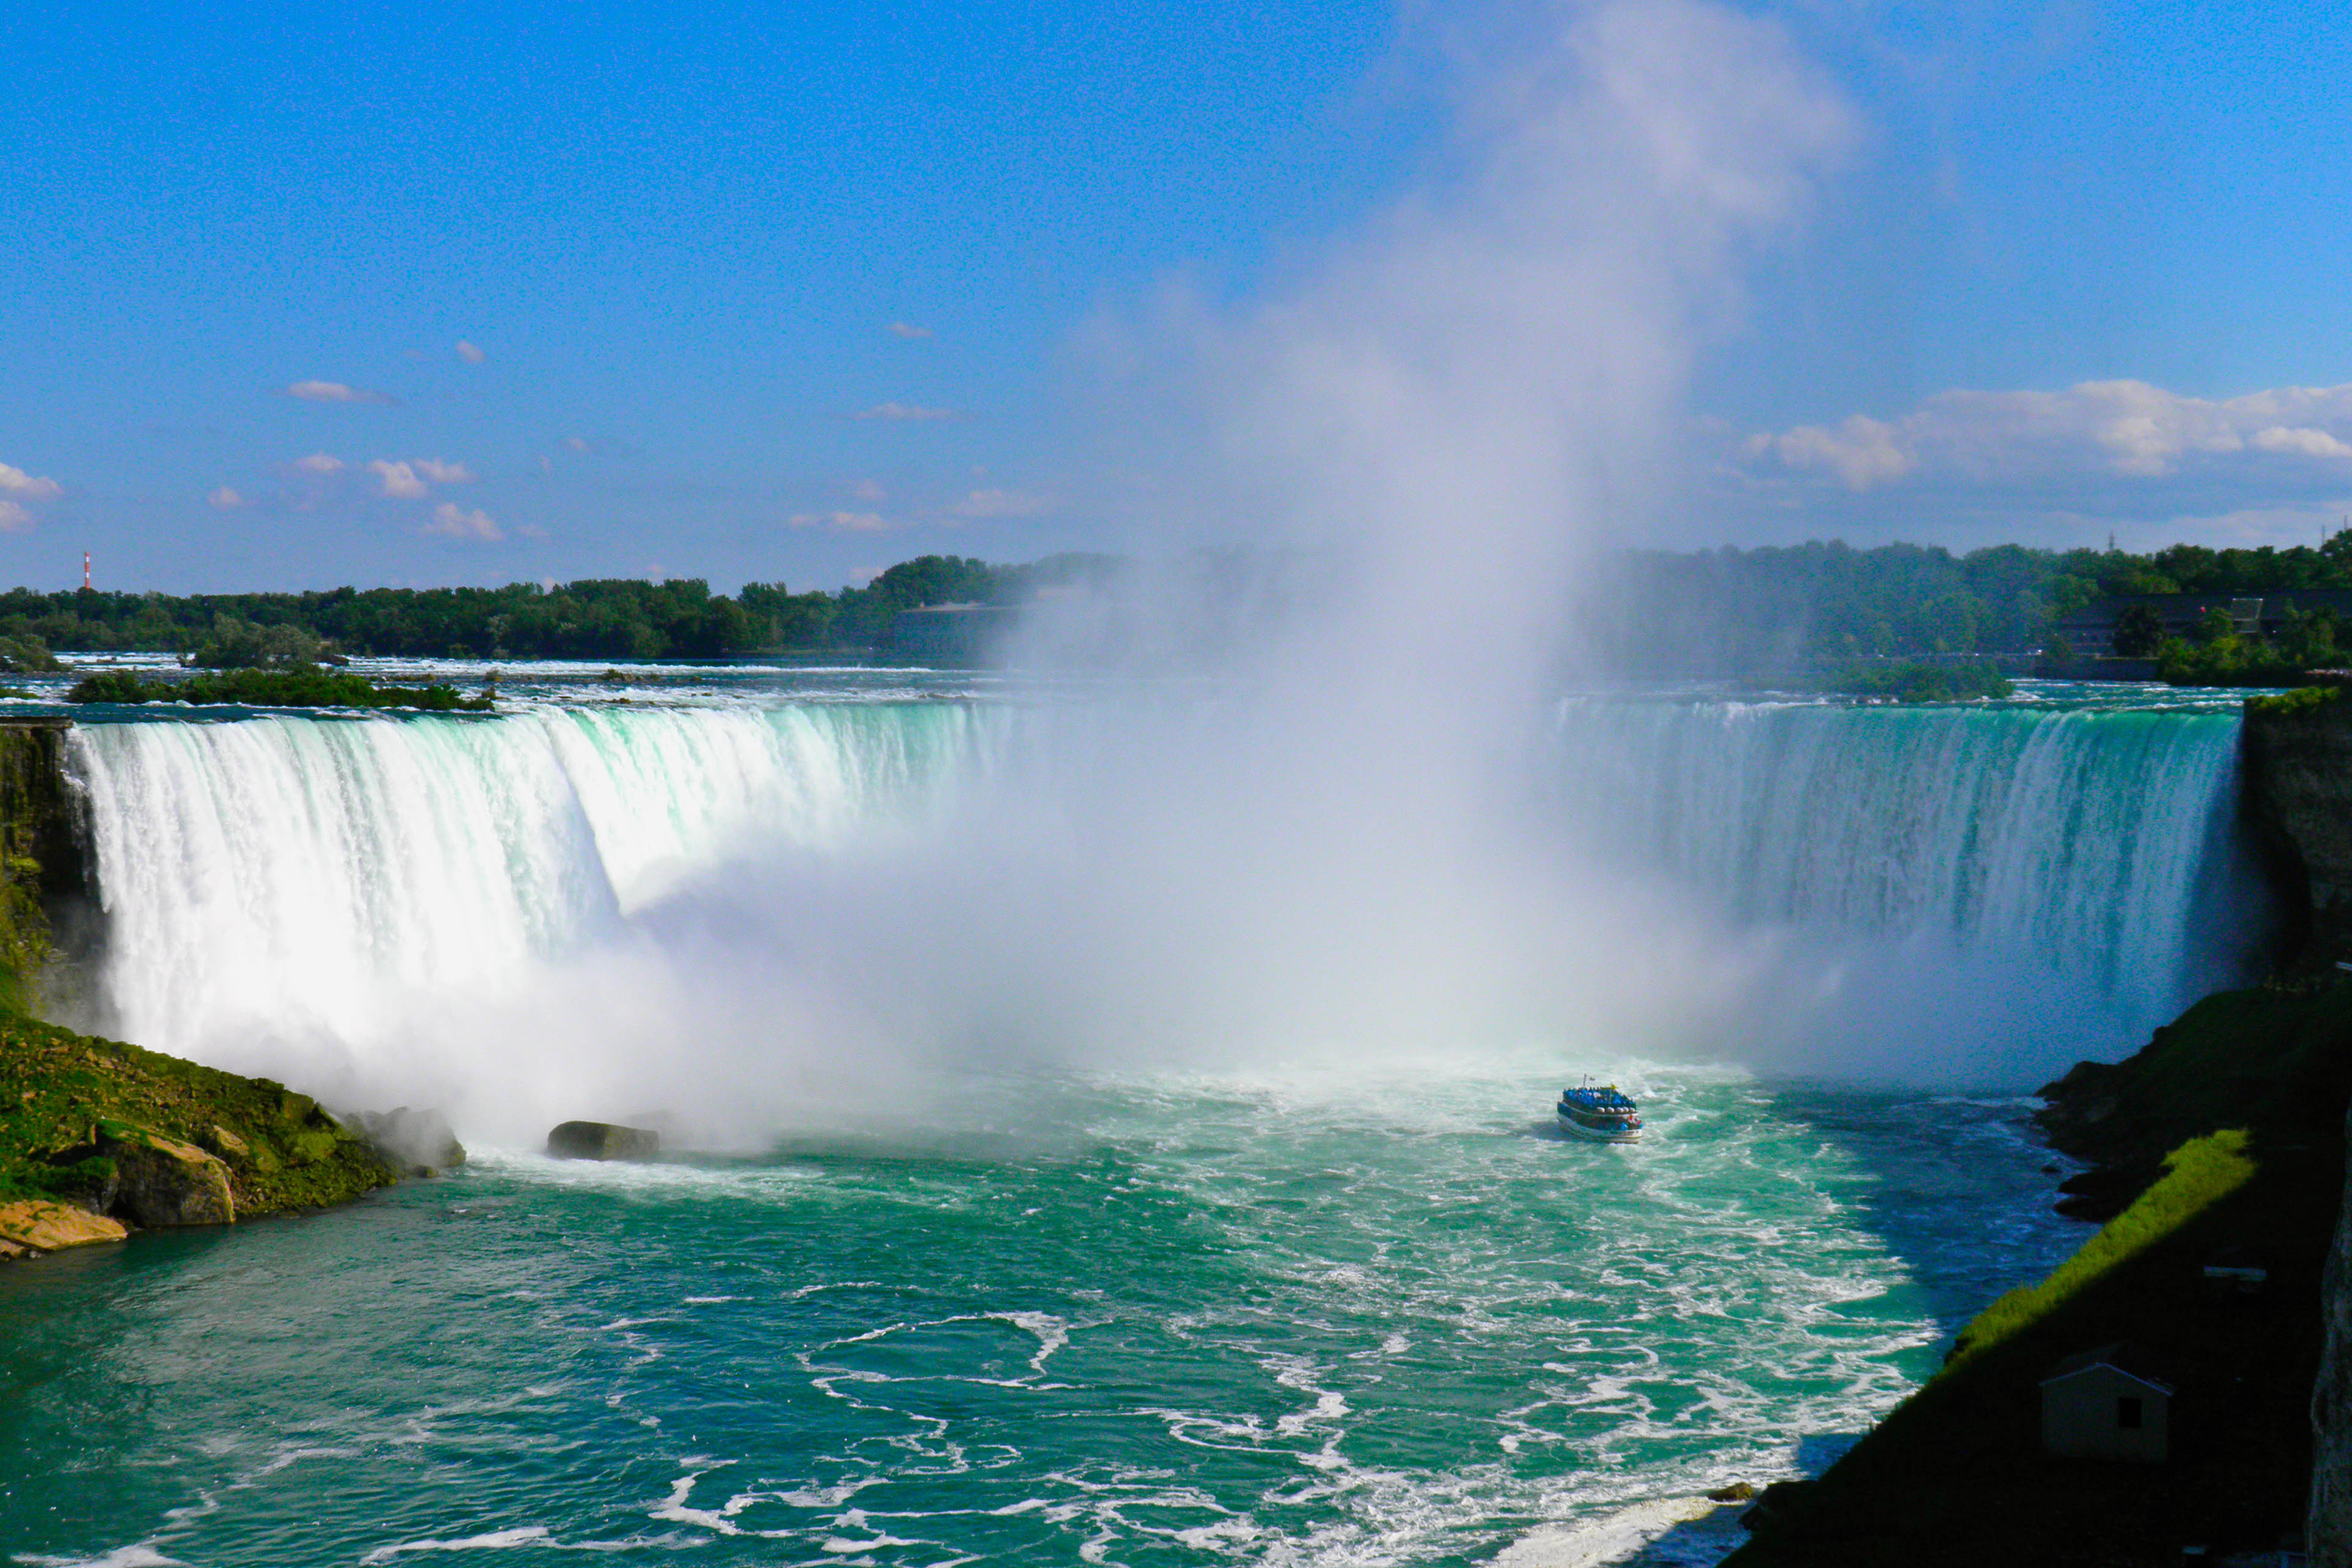 Niagara Falls United States Beautiful Photos and Information